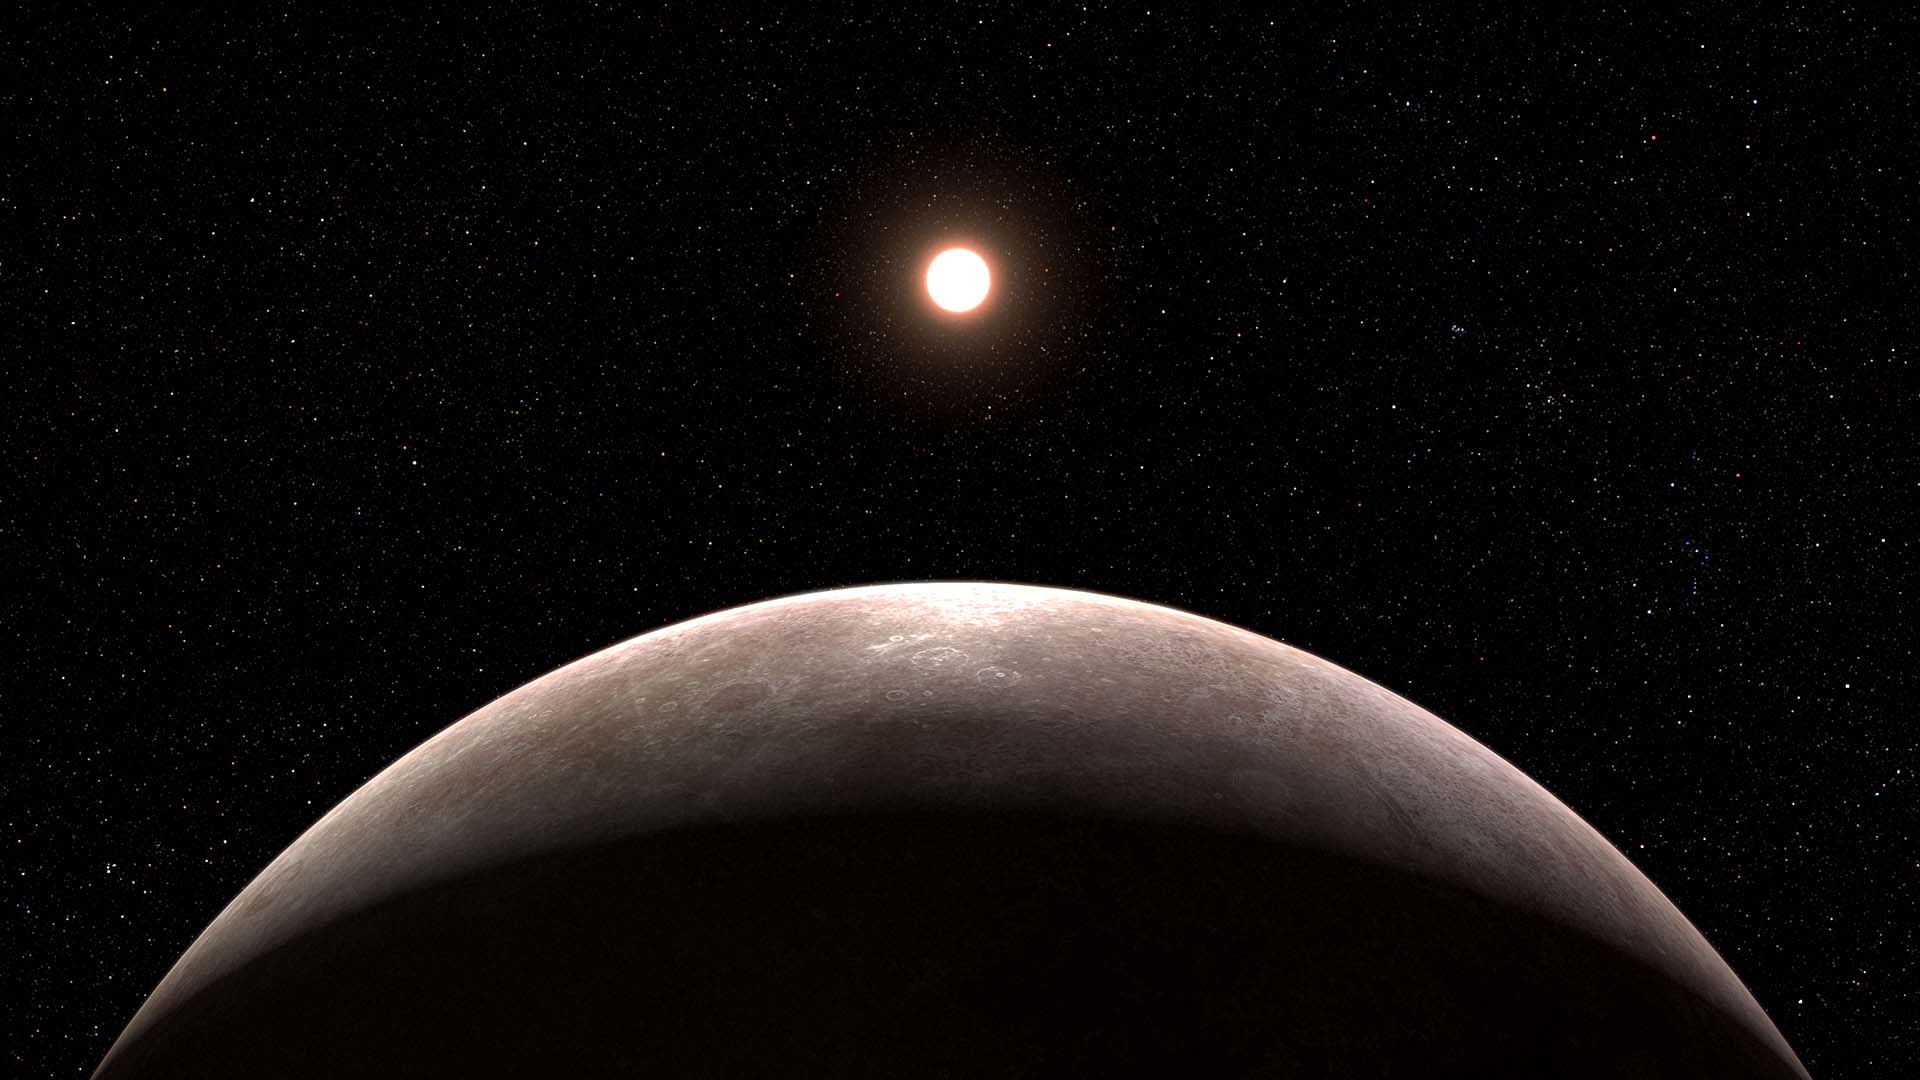 Artist rendering illustration of exoplanet LHS 475 b